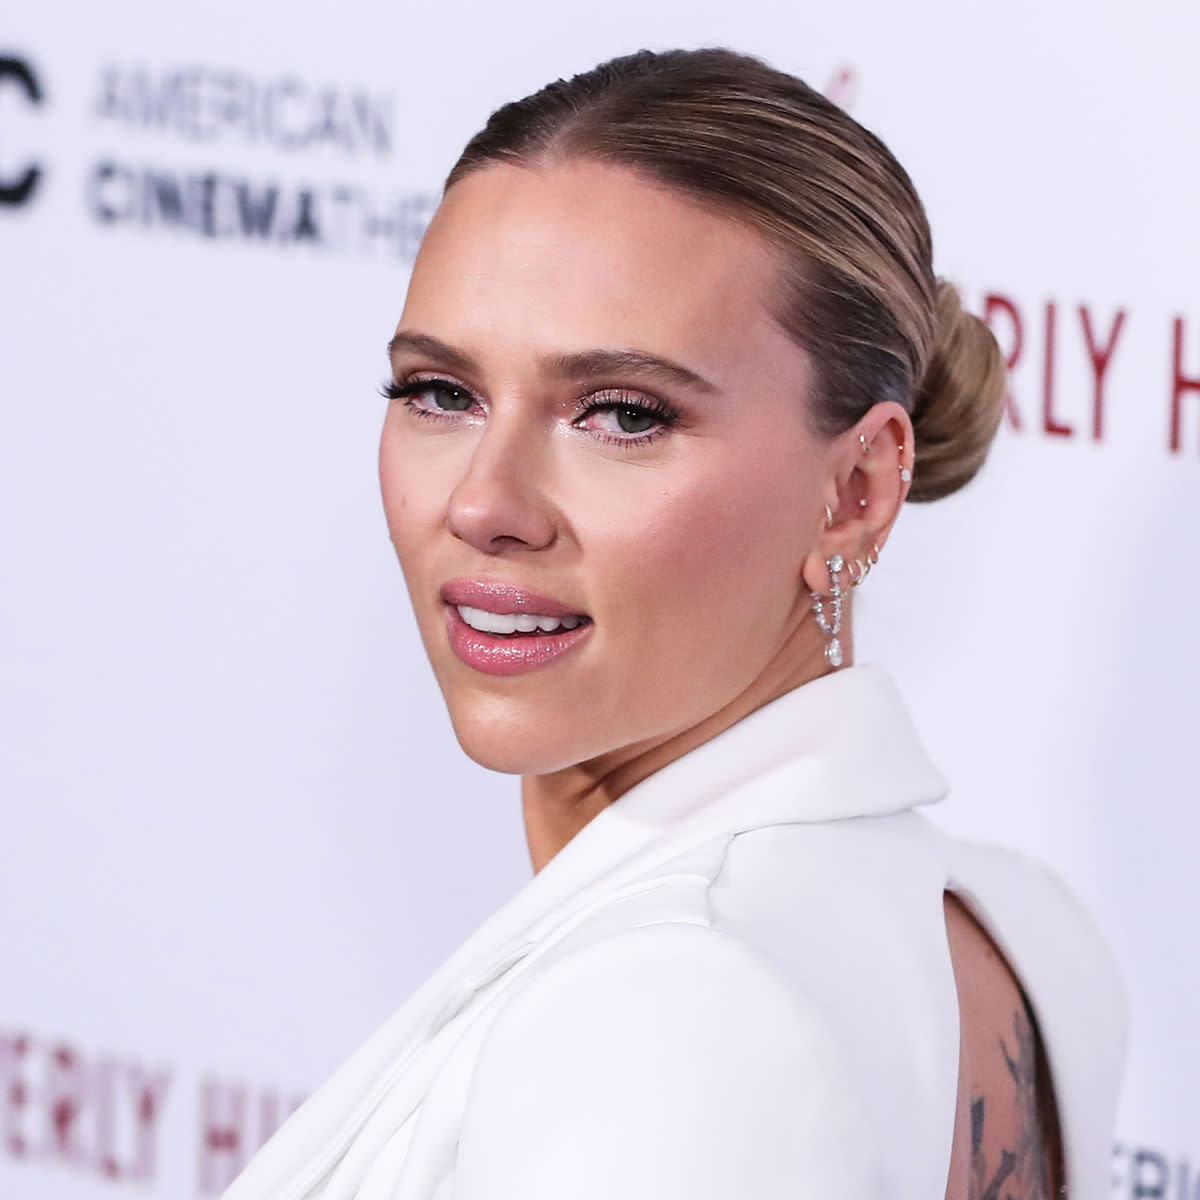 35th Annual American Cinematheque Awards Honoring Scarlett Johansson